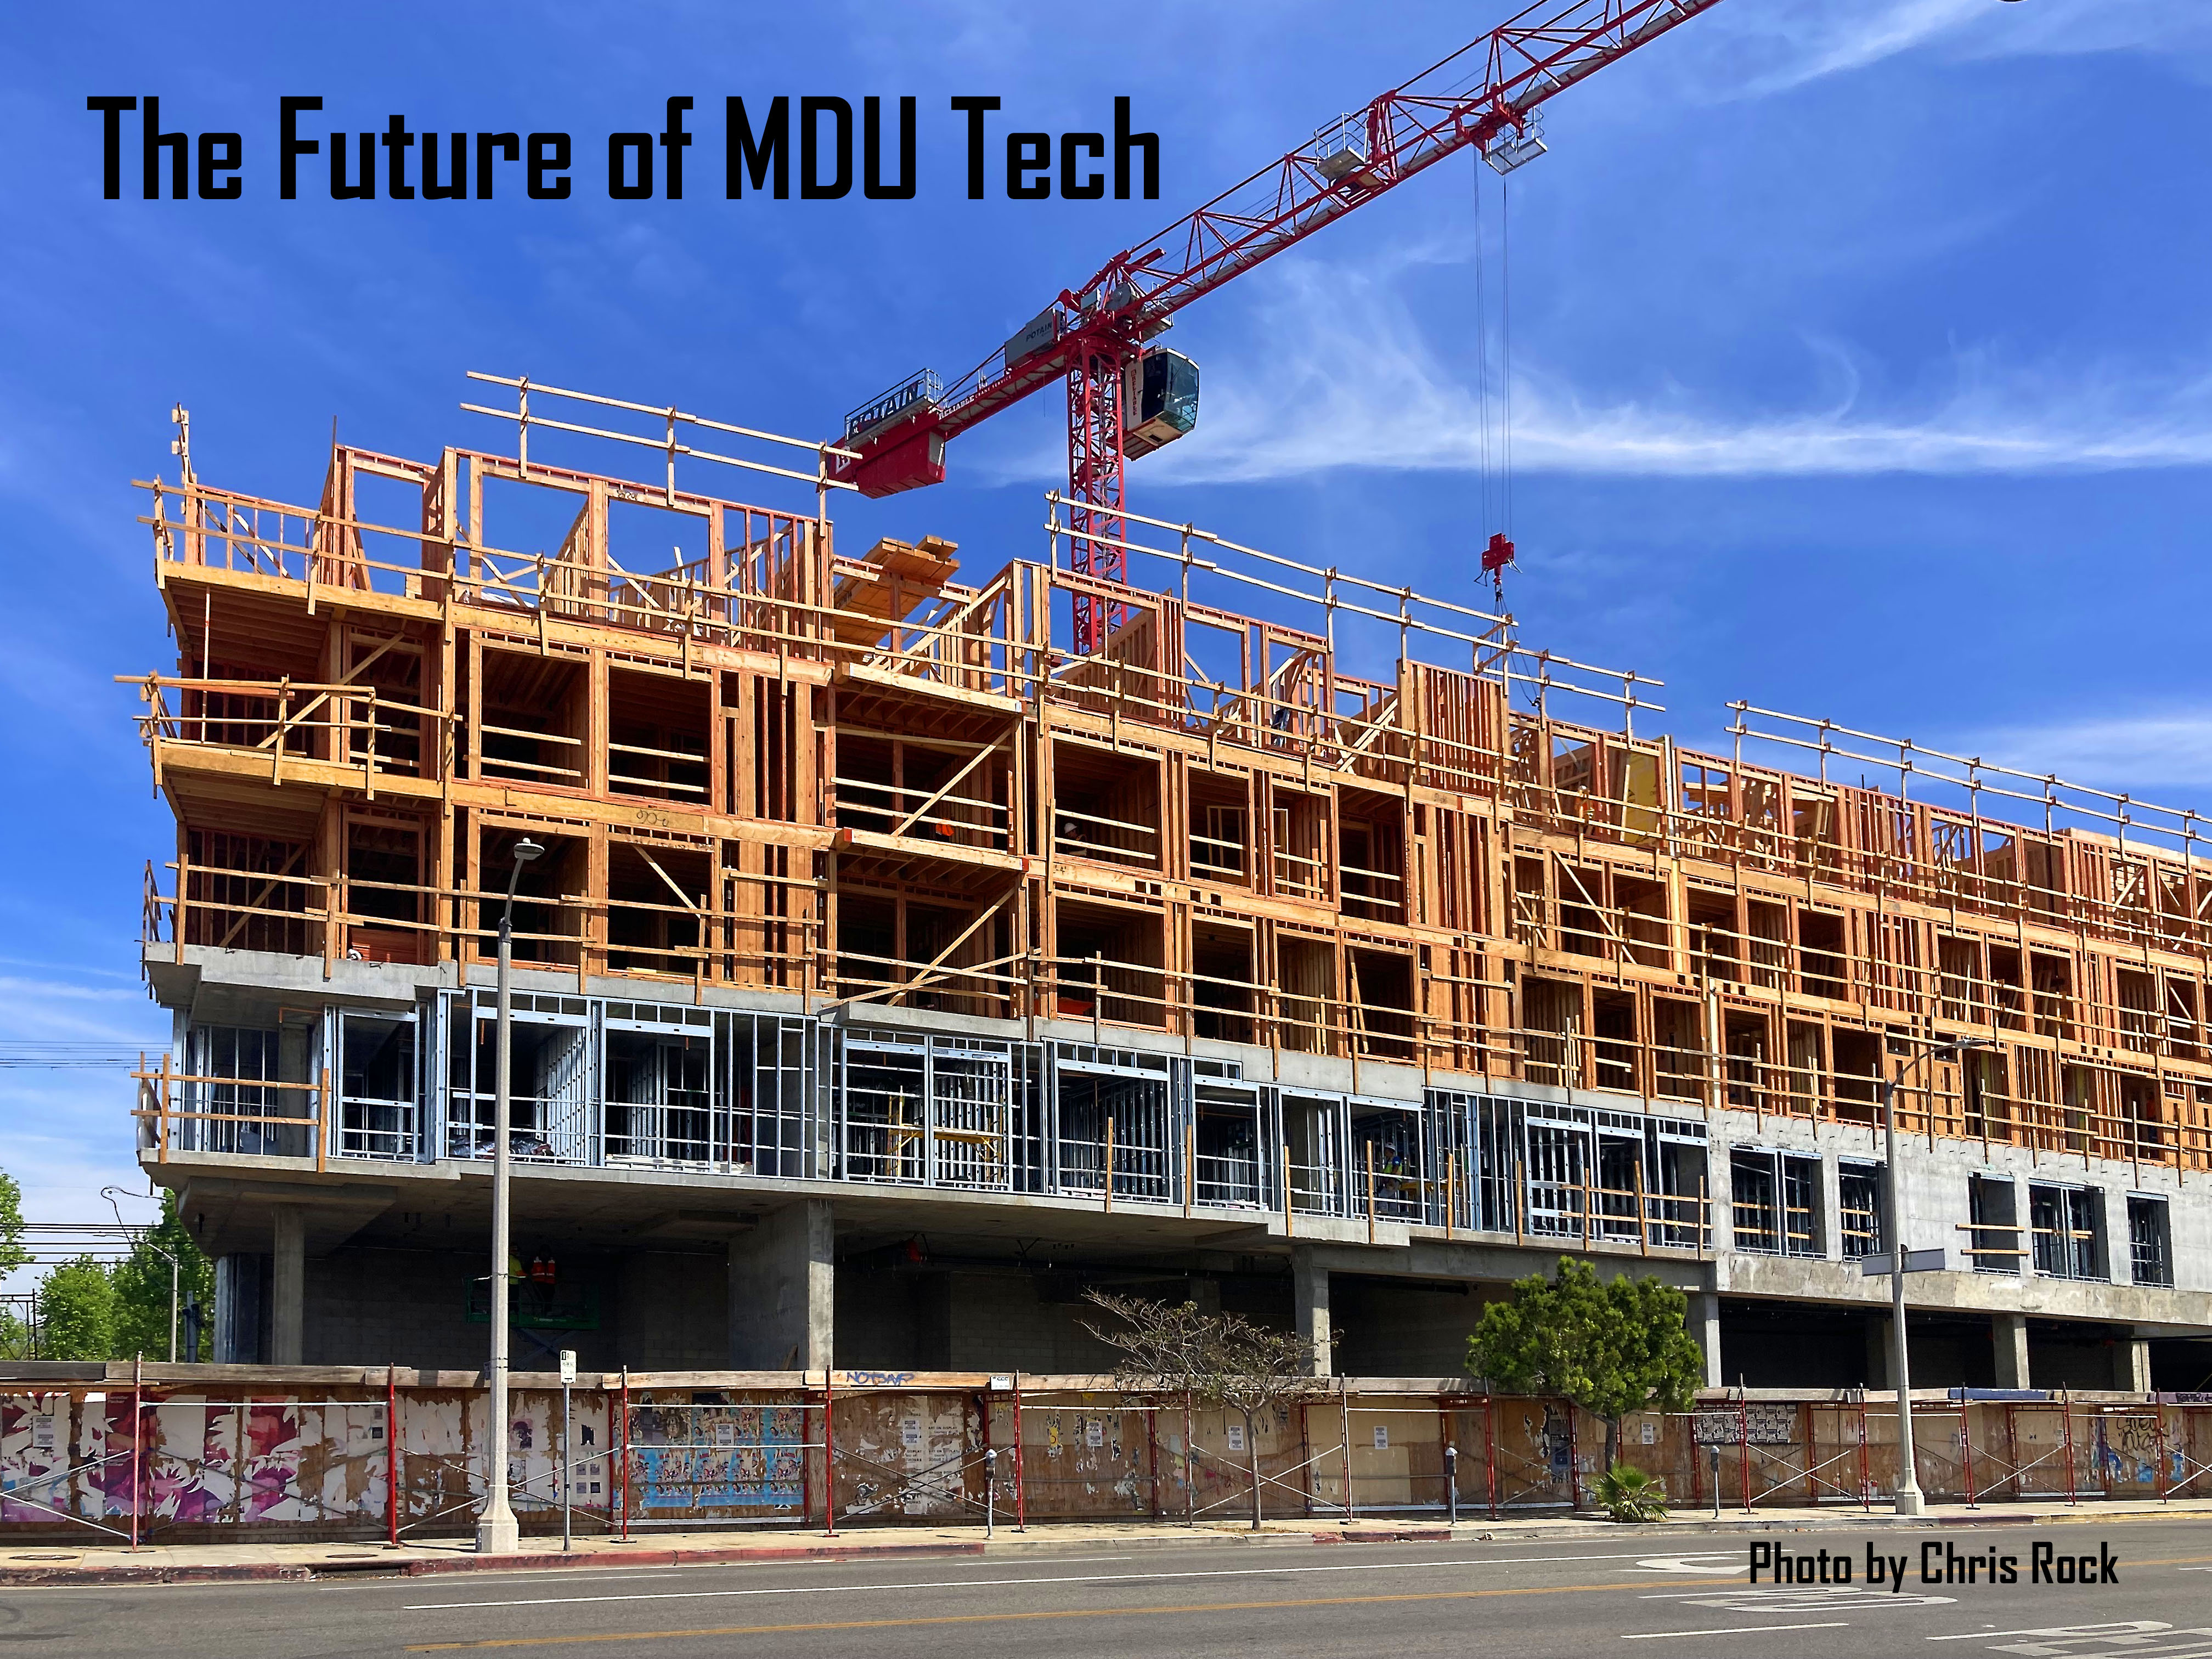 The Future of MDU Tech